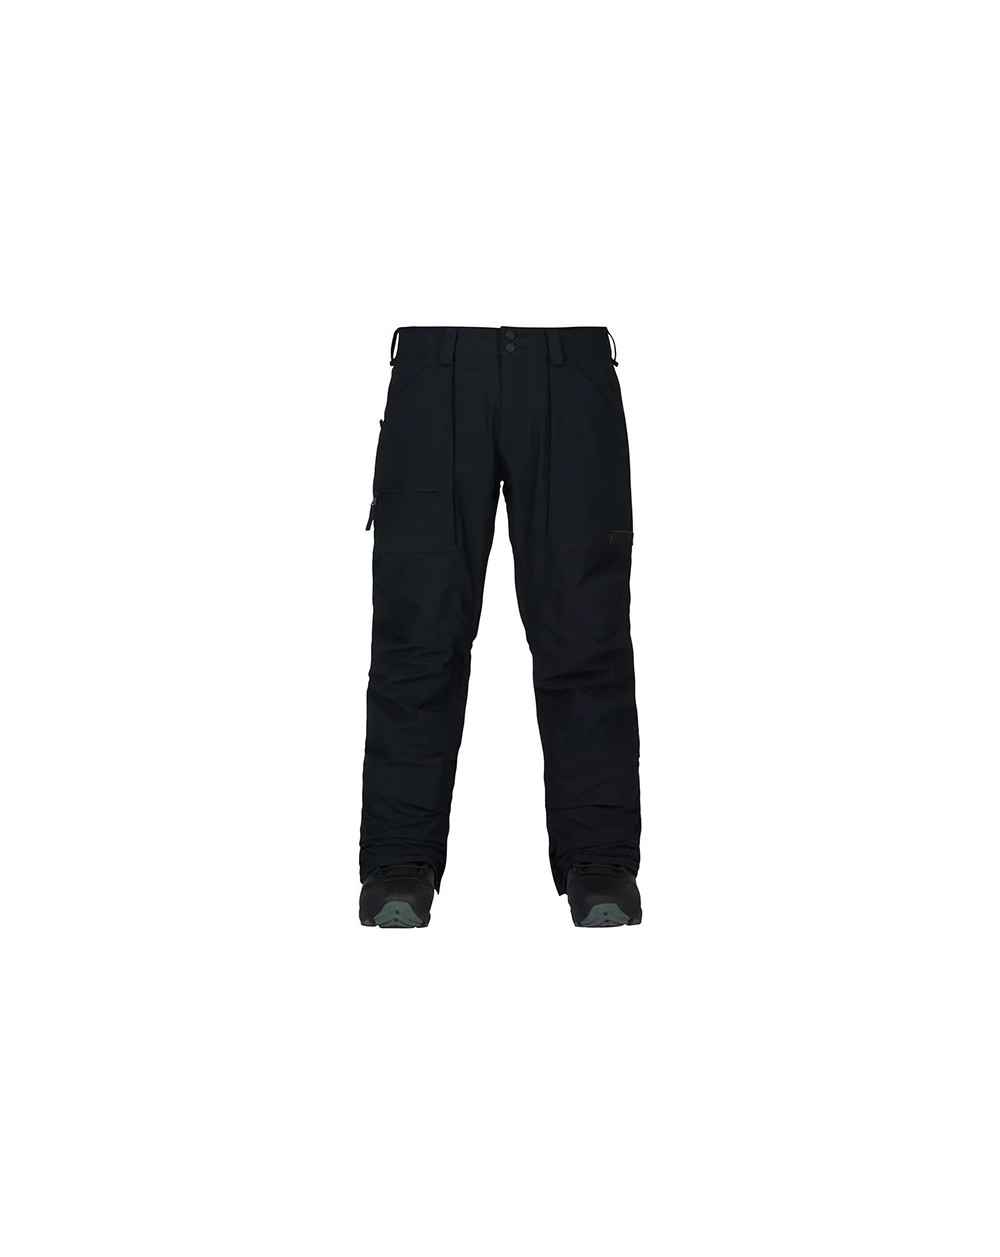 Burton Southside Slim Pant Black 2020 - Pantalones